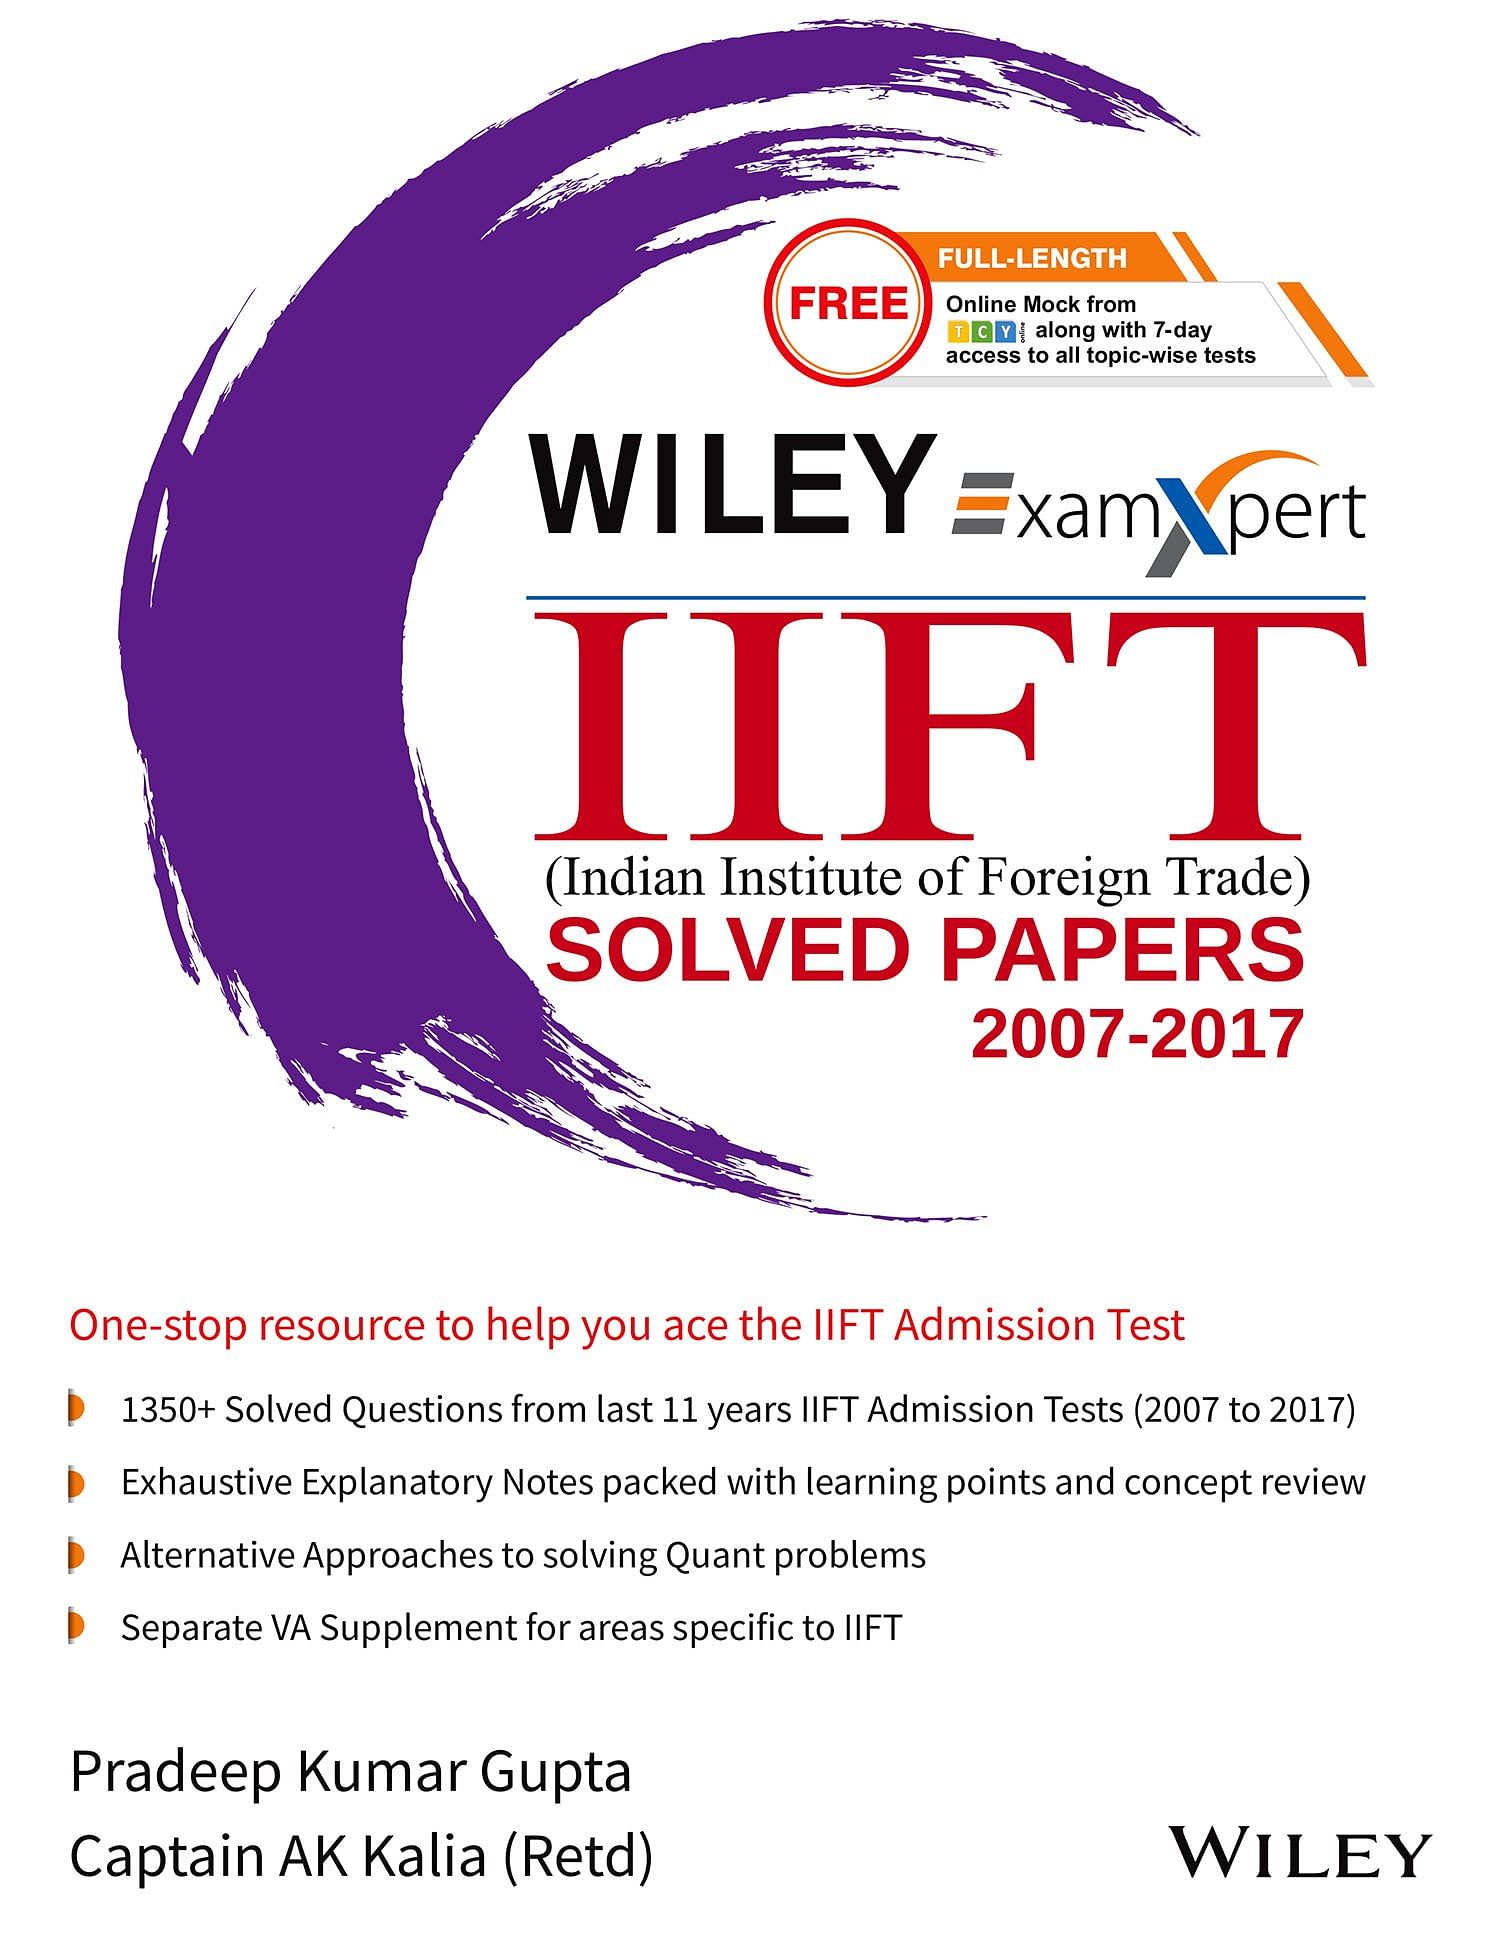 Willey Exam Expert - IIFT Solved Papers